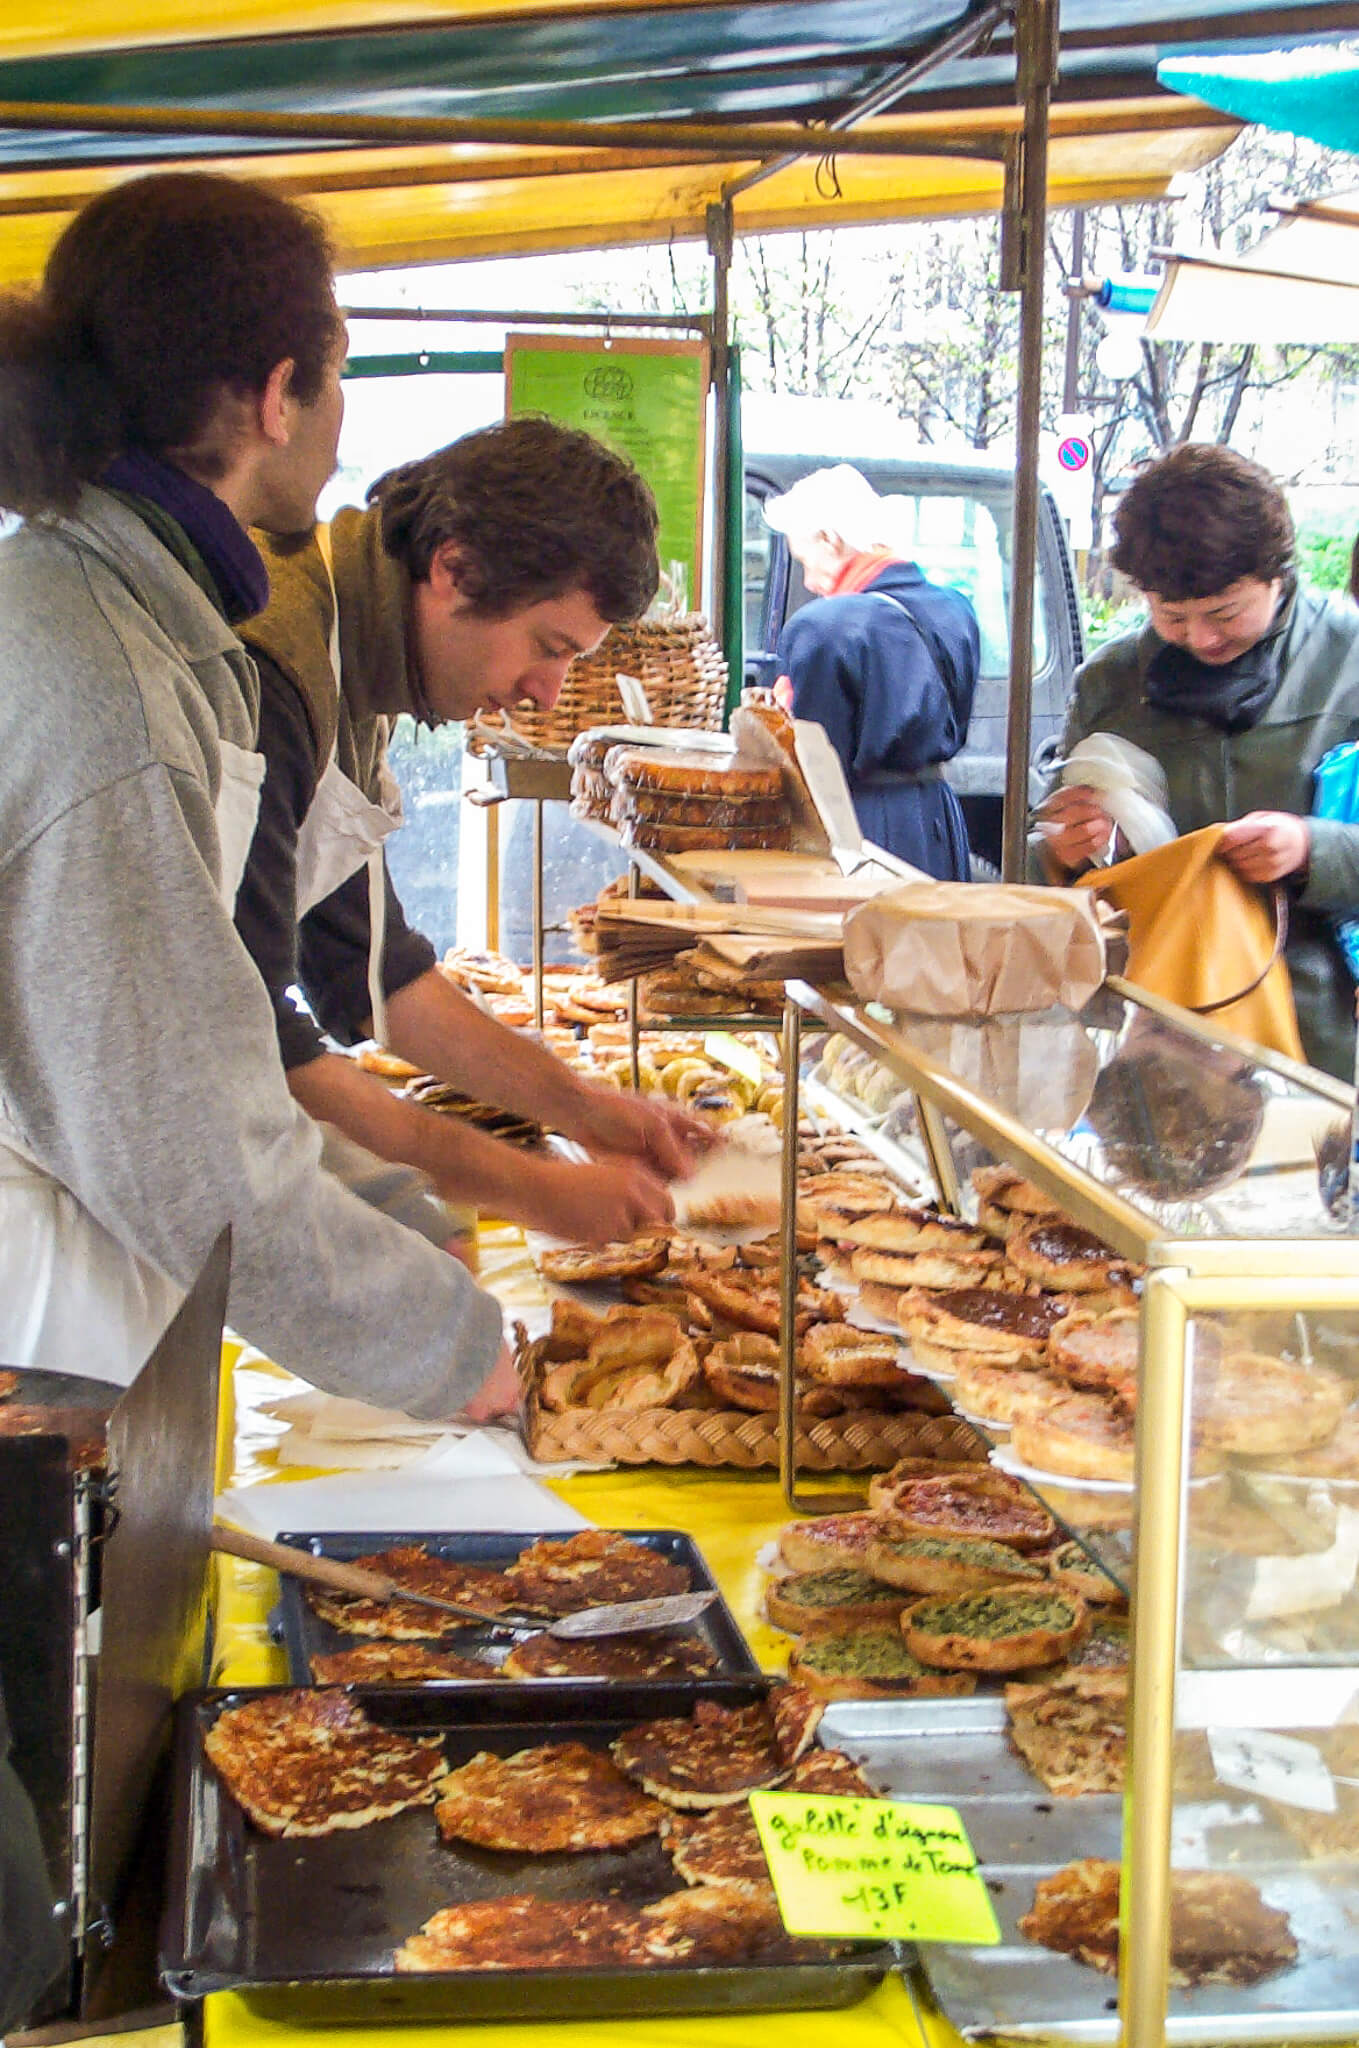 Baked goods at a bustling street market in Paris